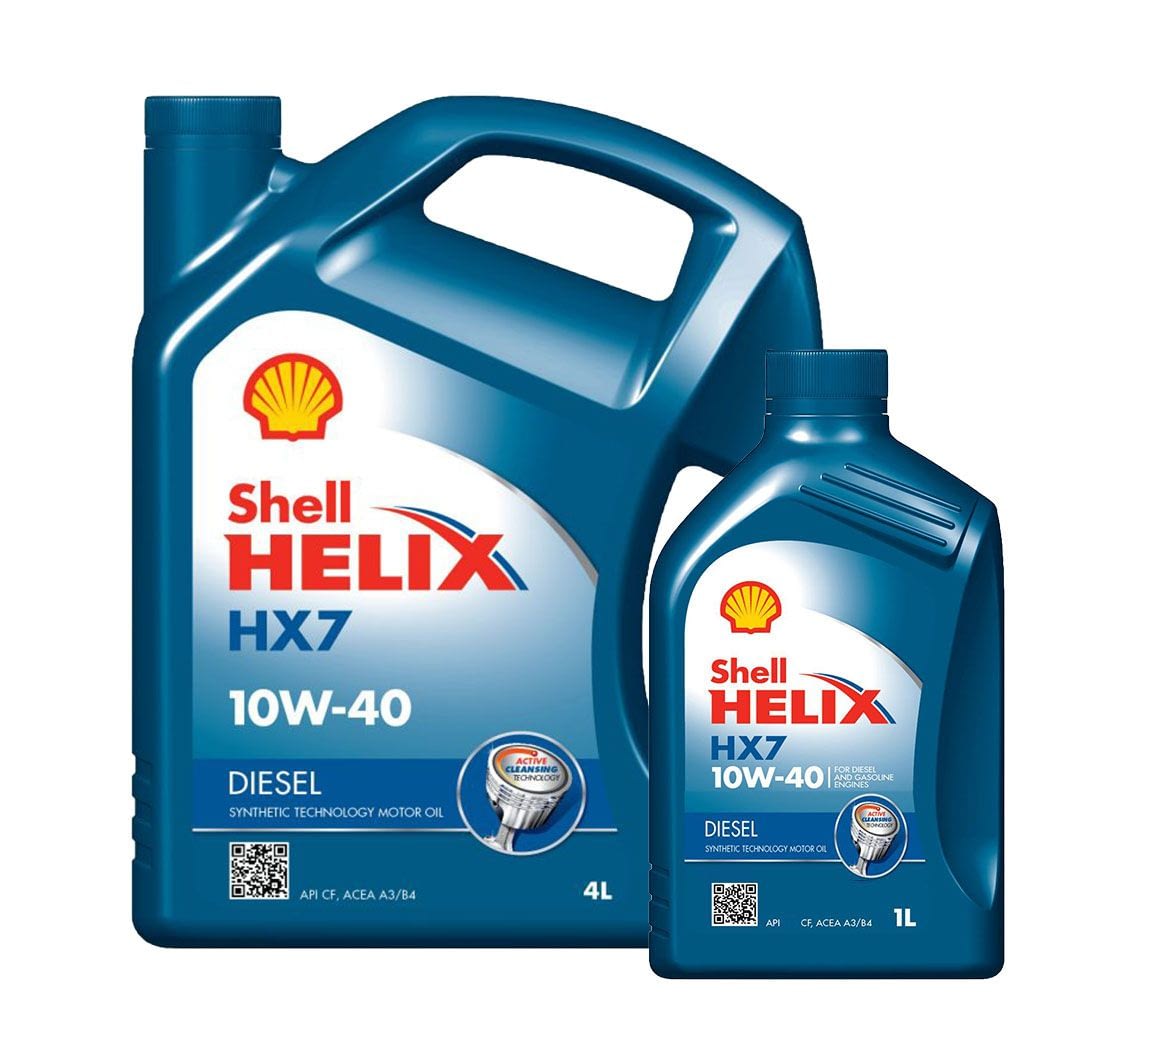 Масло hx7 5w40. Shell Helix HX 7 Diesel 10 40. Shell Helix hx7 SN Plus 10w-40 1л. Масло Shell 10w 40 hx7 дизель. Масло моторное Shell Helix hx7 10w-40, 1l.